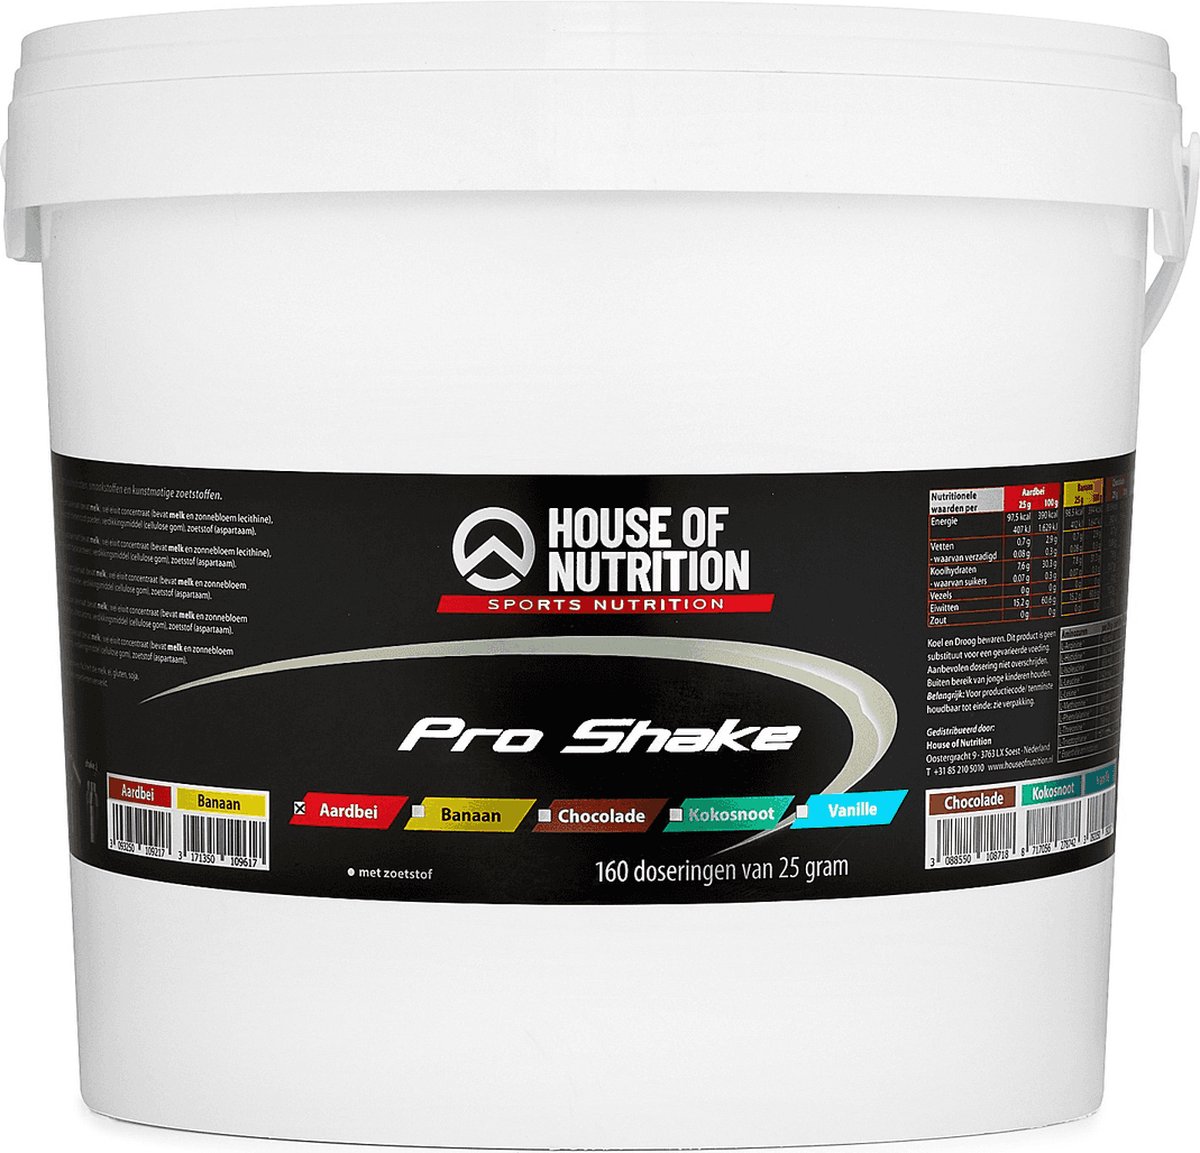 House of Nutrition - Pro Shake (Strawberry - 4000 gram) - Eiwitshake - Eiwitpoeder - Eiwitten - Proteine poeder - Eiwitshake - Whey Protein - Eiwitpoeder - Proteine poeder - 160 shakes